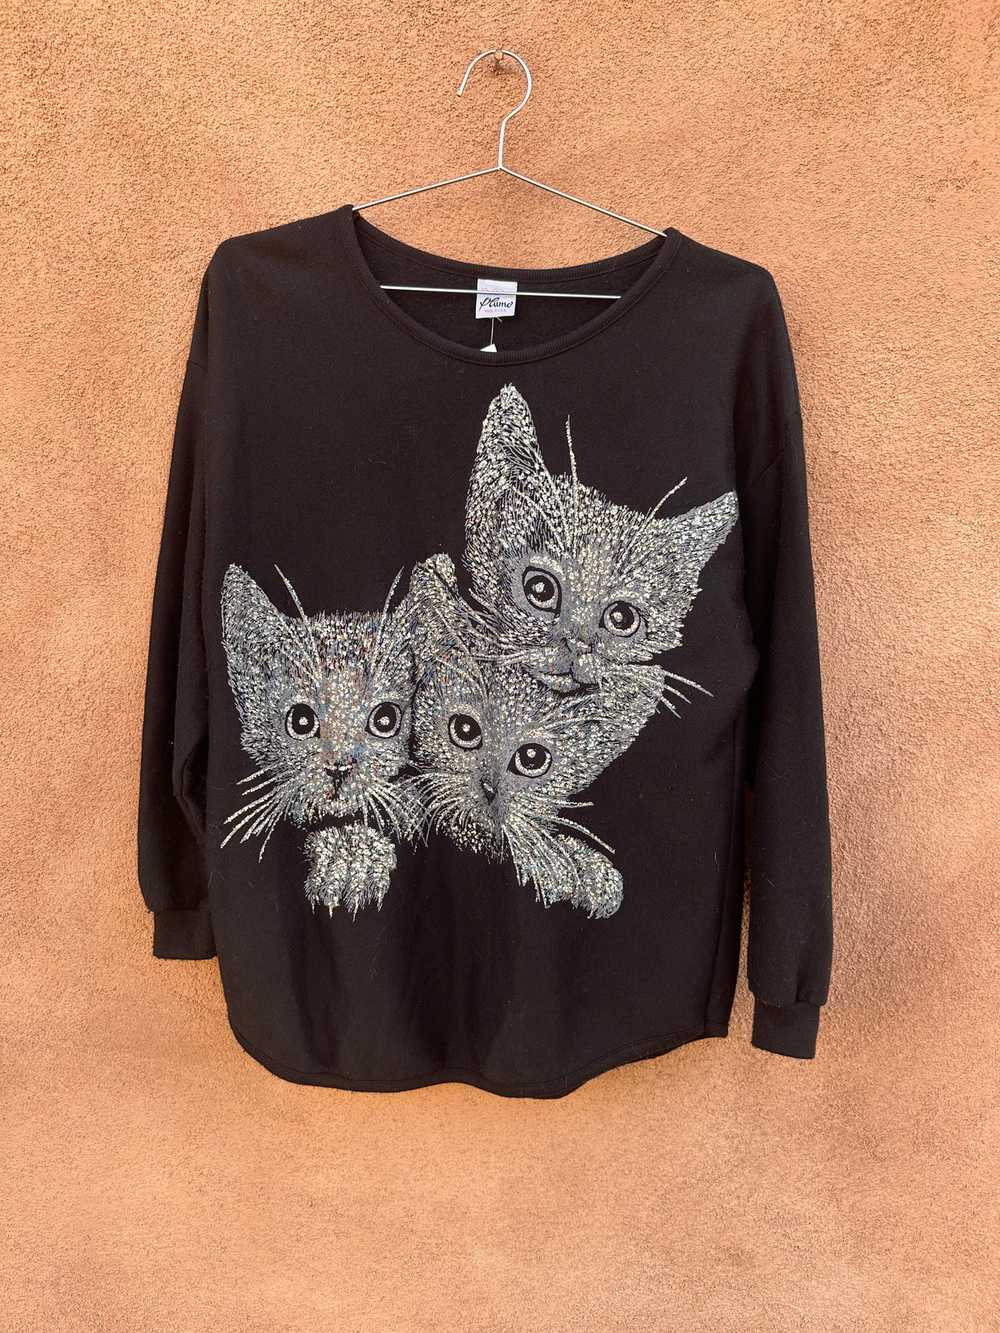 Sparkly Silver Kitten Sweatshirt - as is - image 1